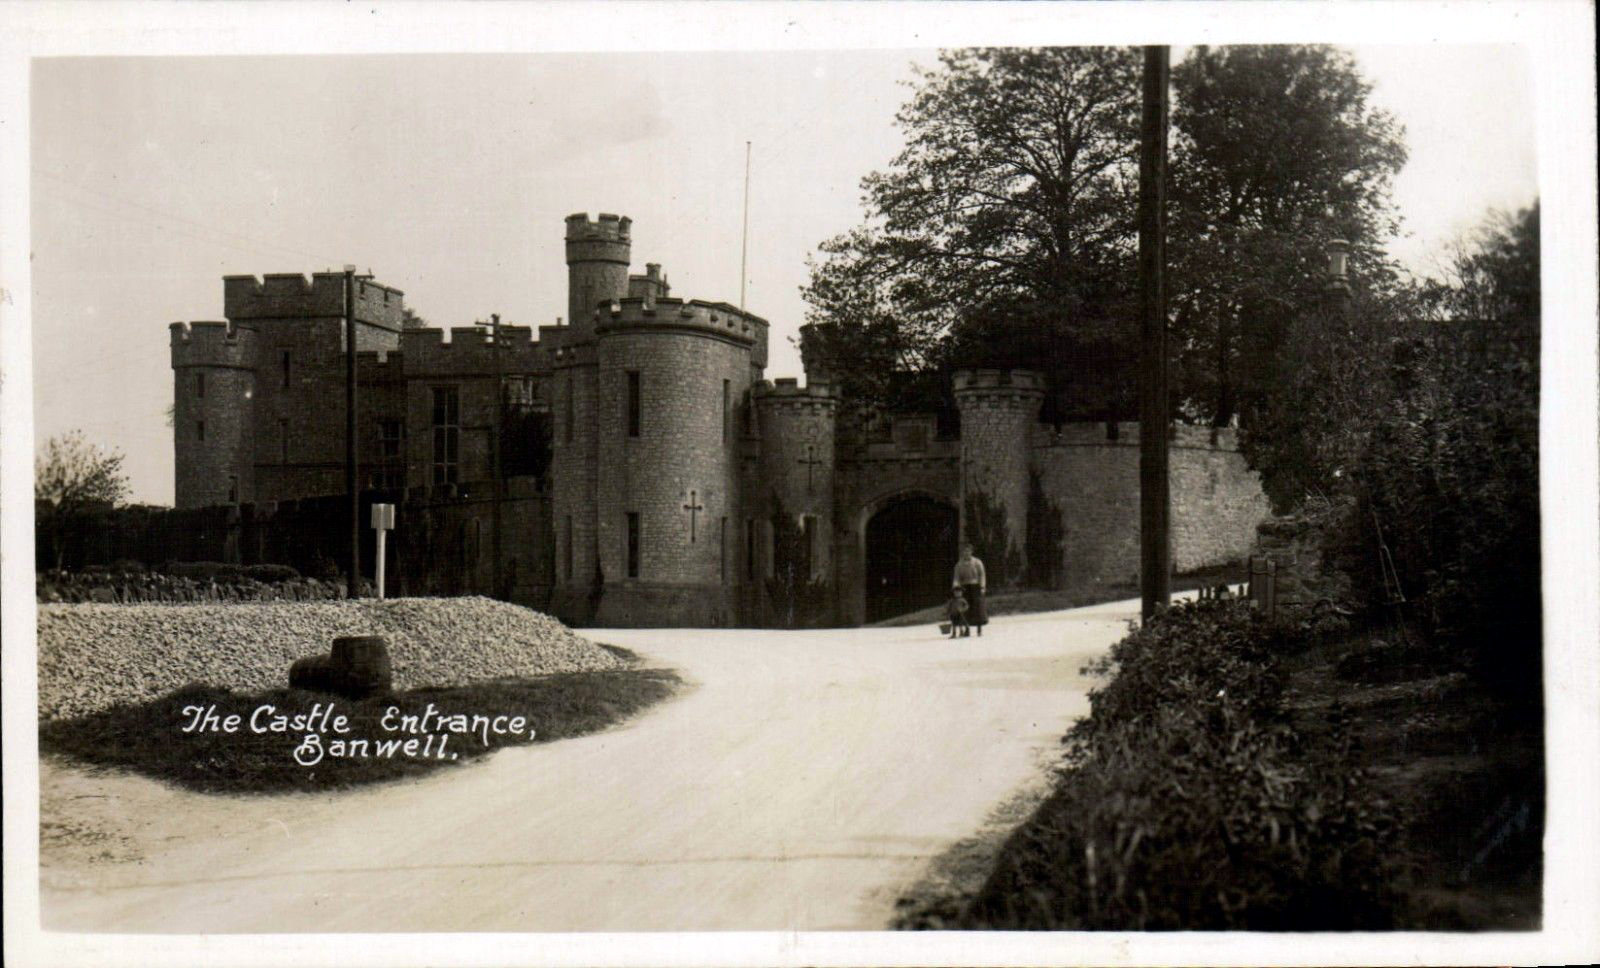 Banwell Castle